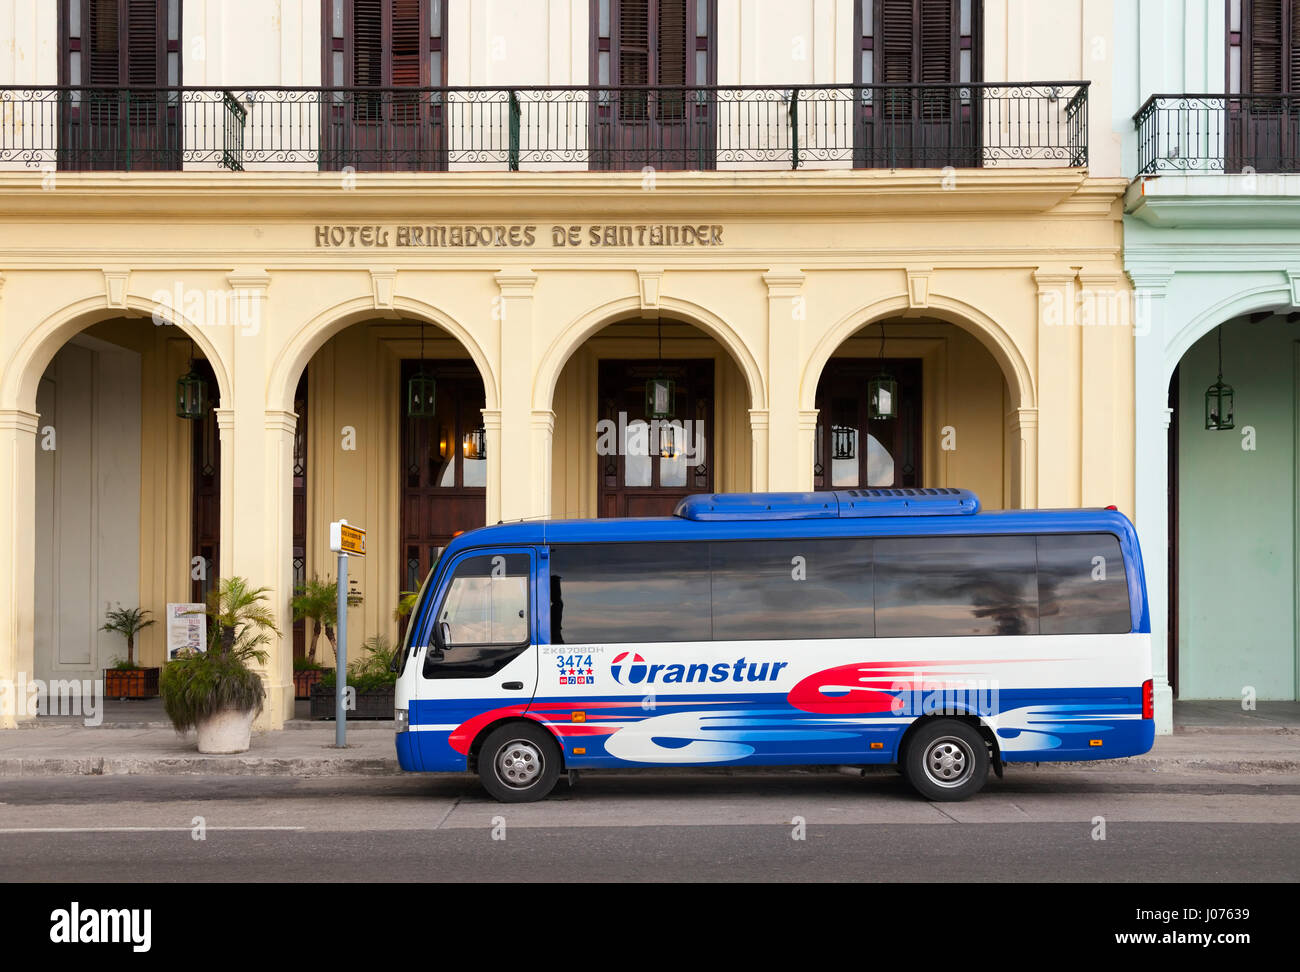 A Transtur bus in front of the Hotel Armadores de Santander along the Malecon in Old Havana, Cuba. Stock Photo